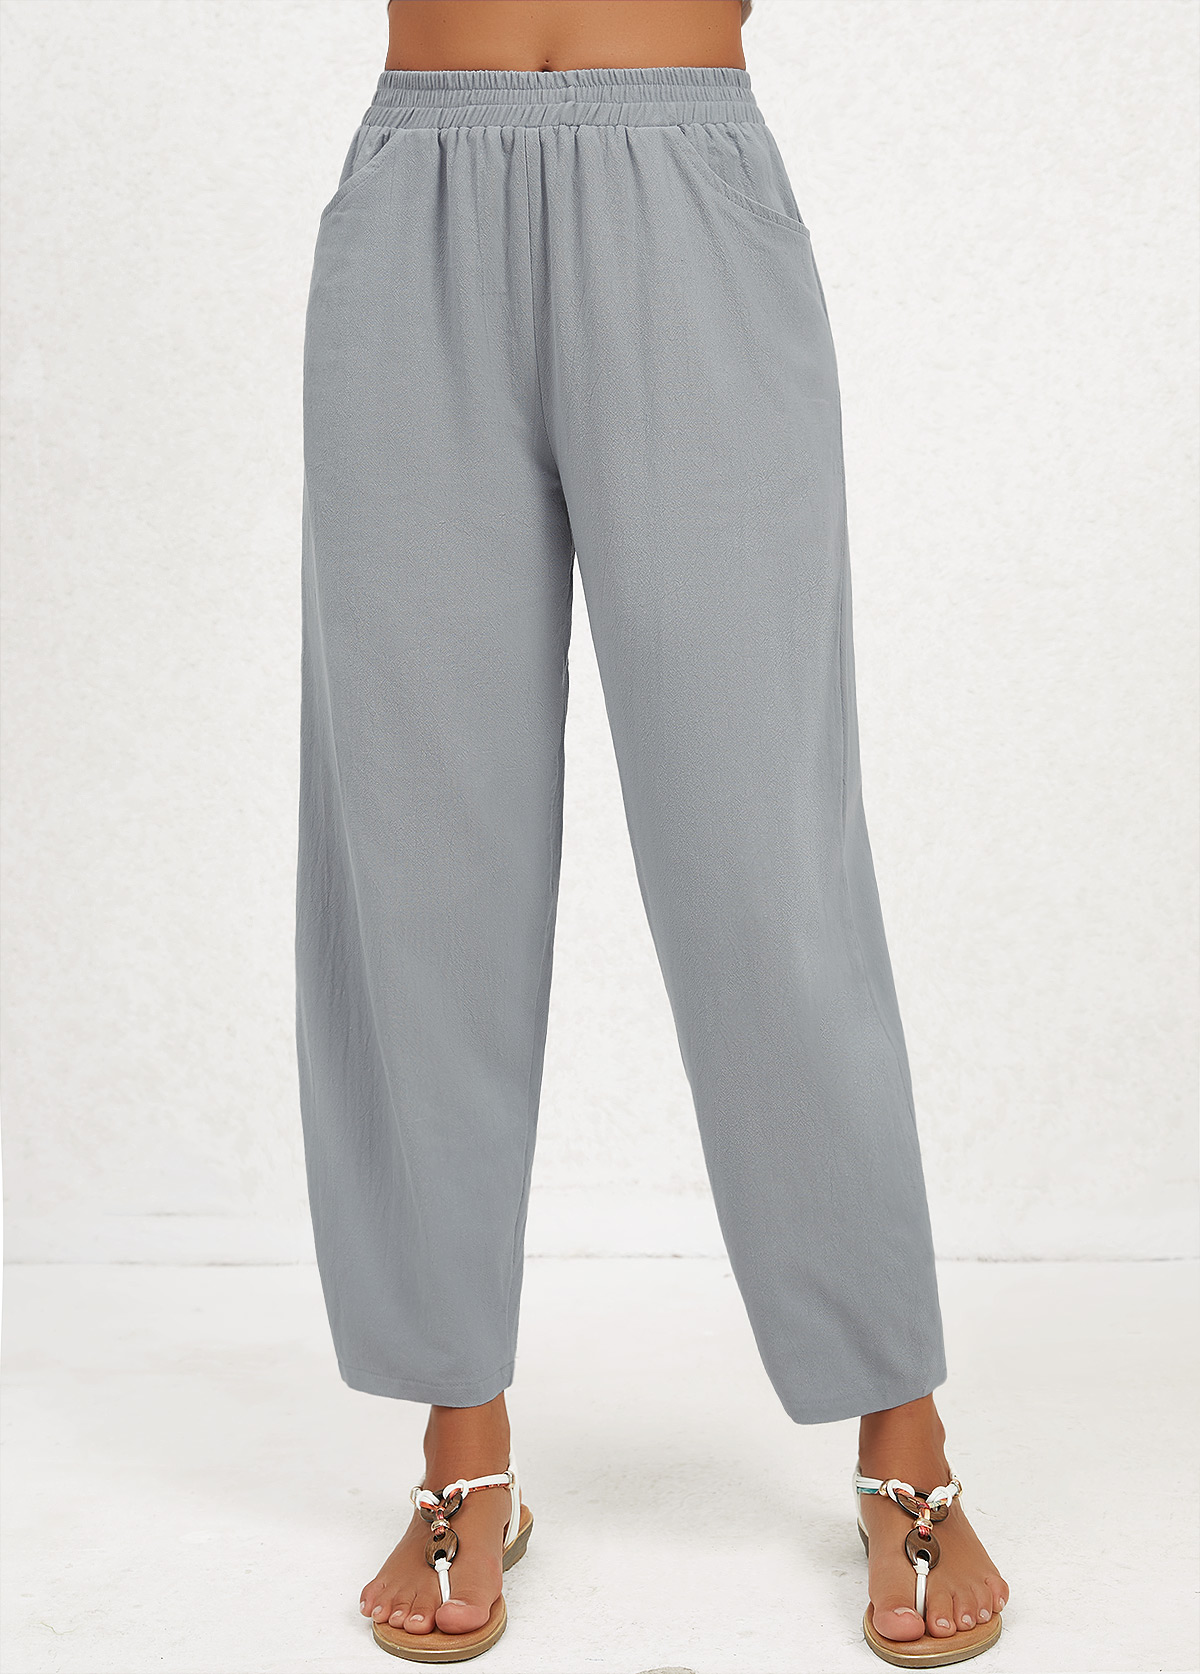 Pocket Grey Regular Elastic Waist High Waisted Pants